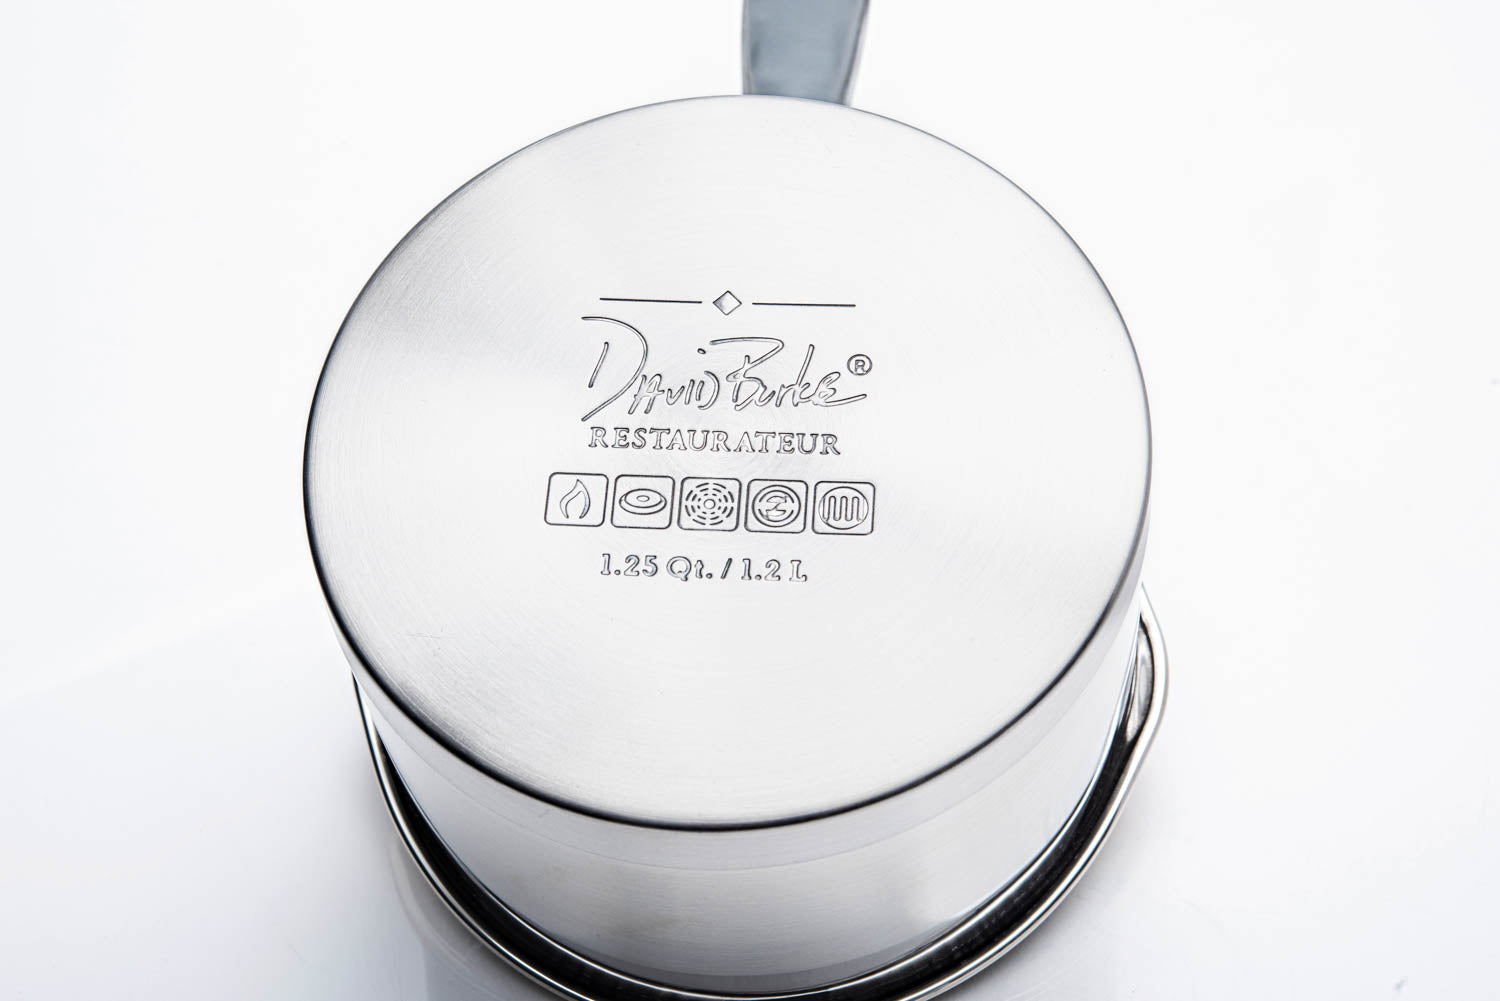 David Burke® Sauce Pan Pot 1.25 Qt Gourmet Pro Stainless Heavy